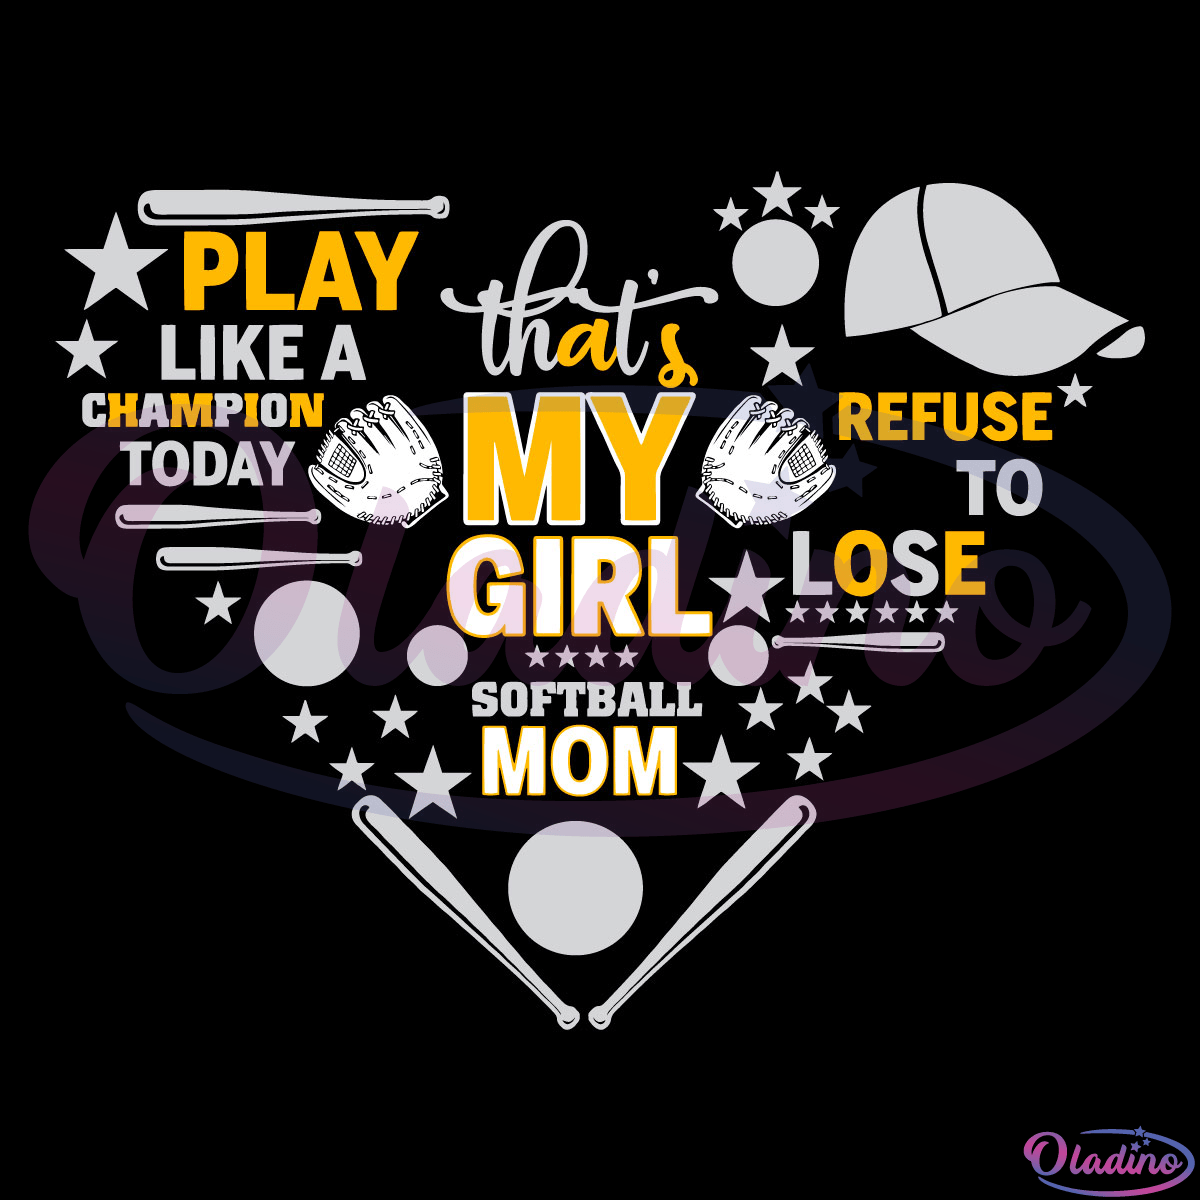 Play like a champion thats my girl softball mom refuse to lose Svg Digital File